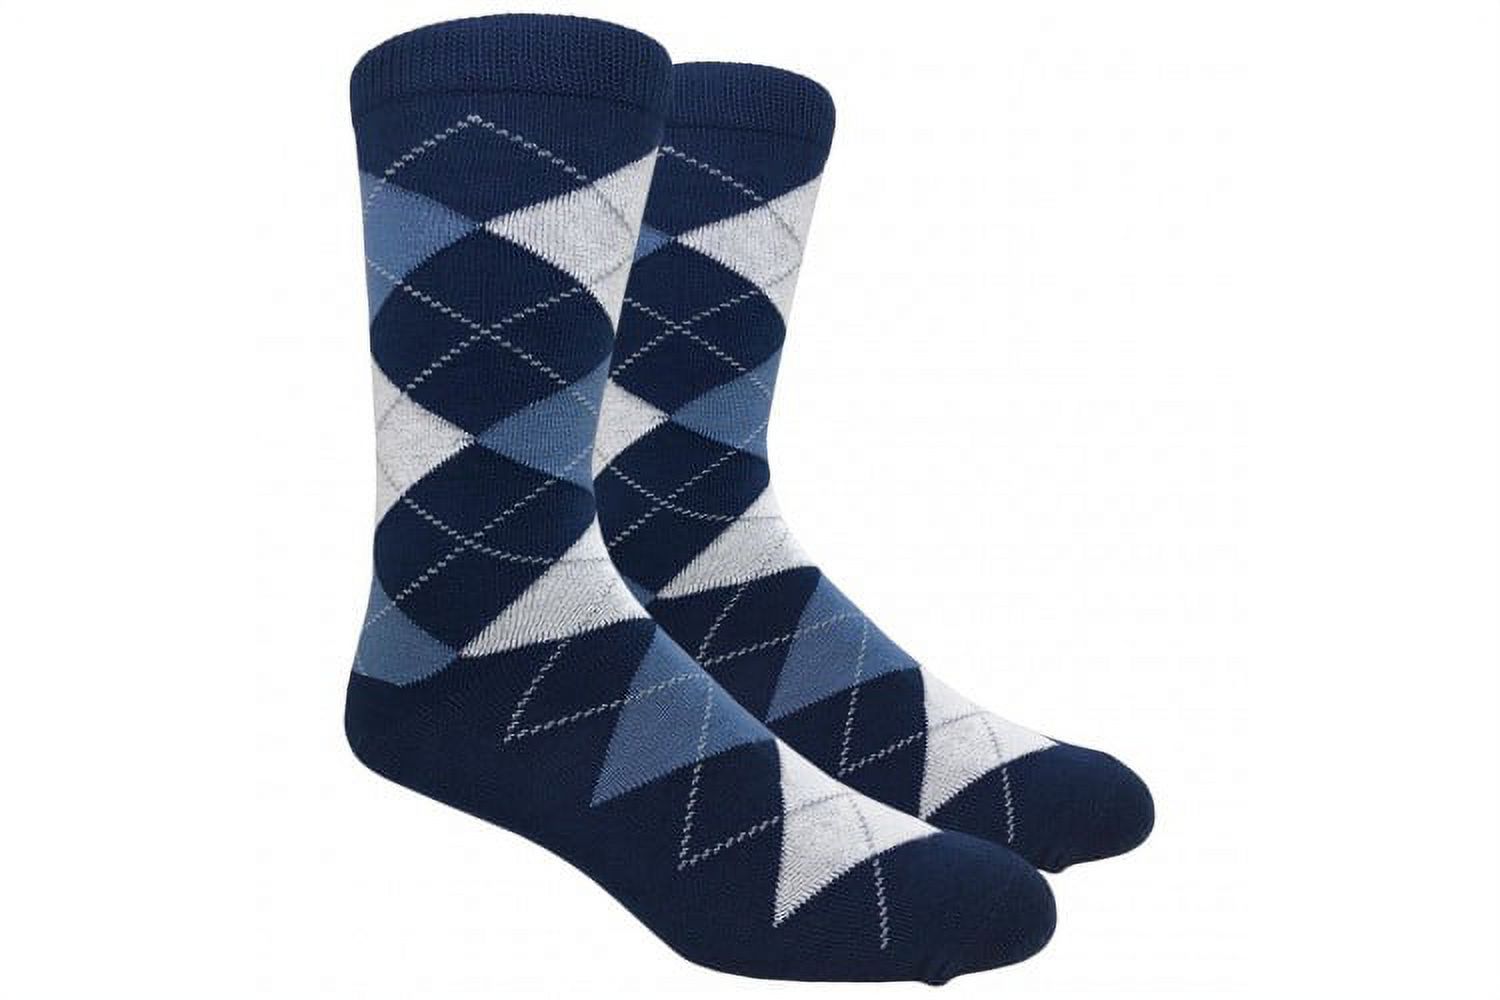 Big Tall Argyle Socks for Men 3 pack 13-15 - image 2 of 4